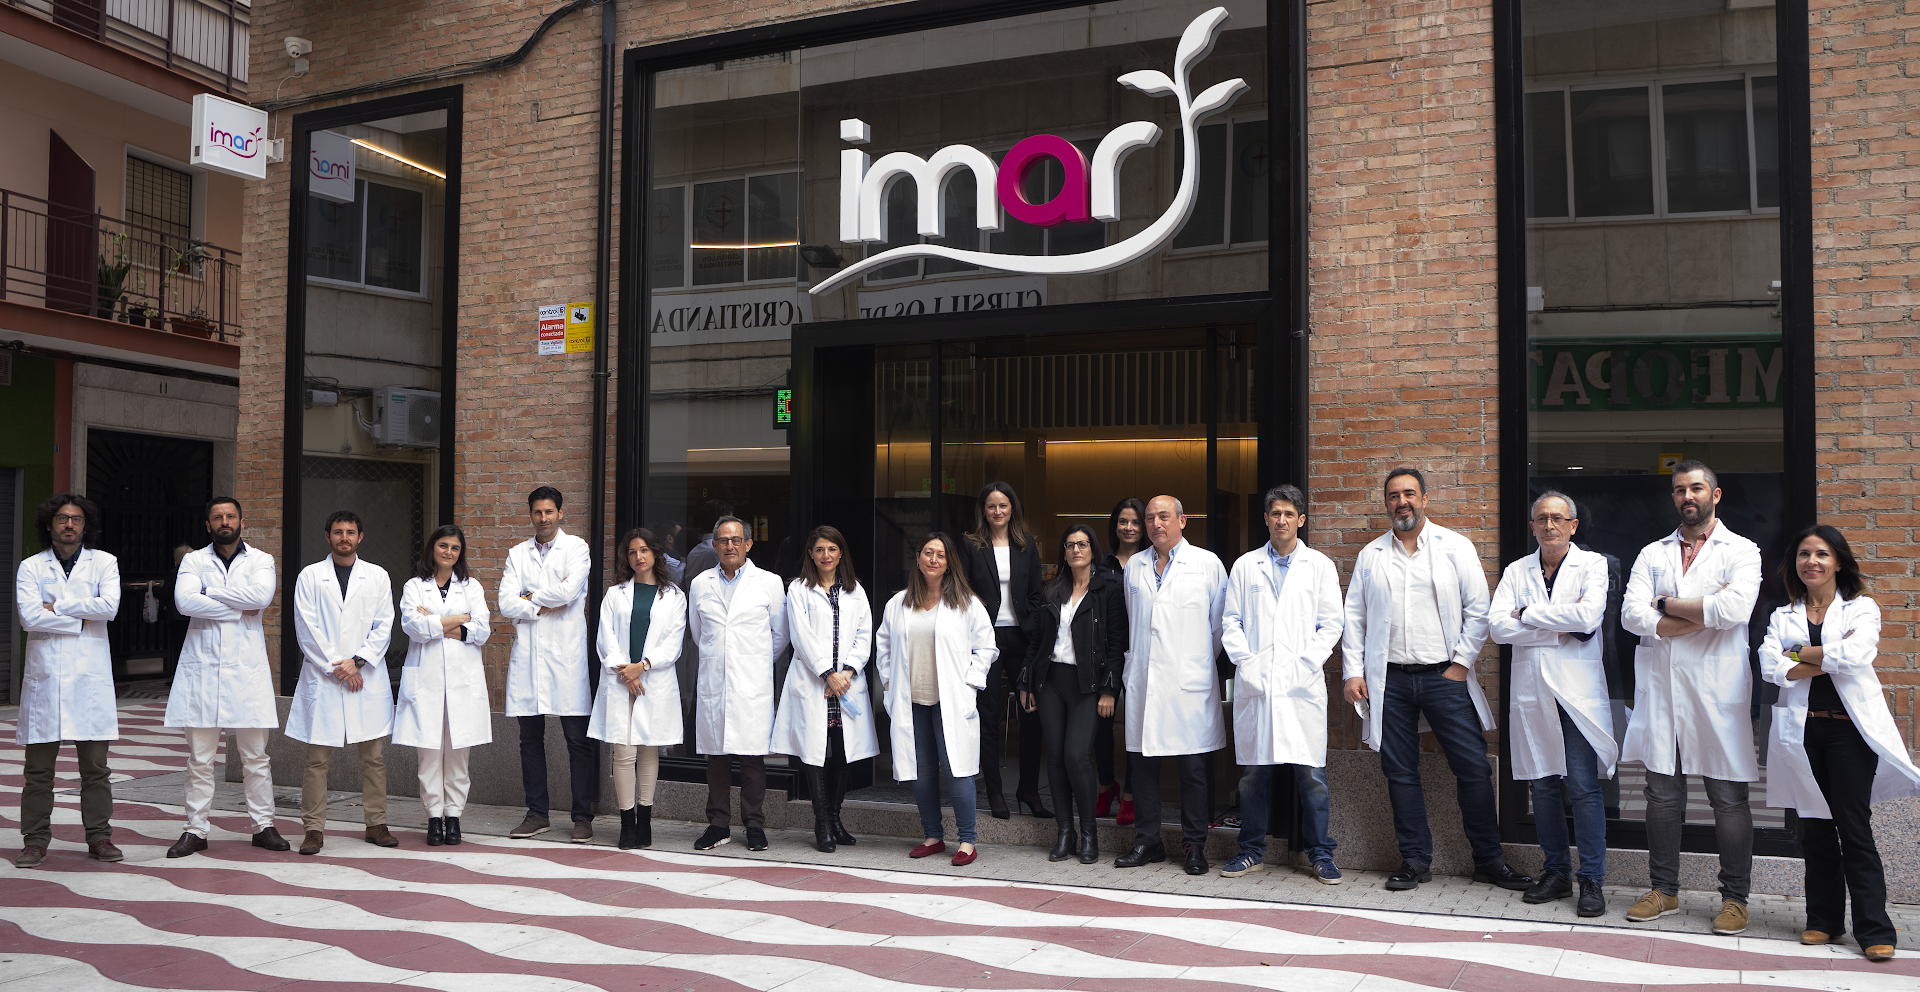 CLÍNICA IMAR | Clínica de Reproducción asistida, fertilidad e Inseminación artificial en Murcia